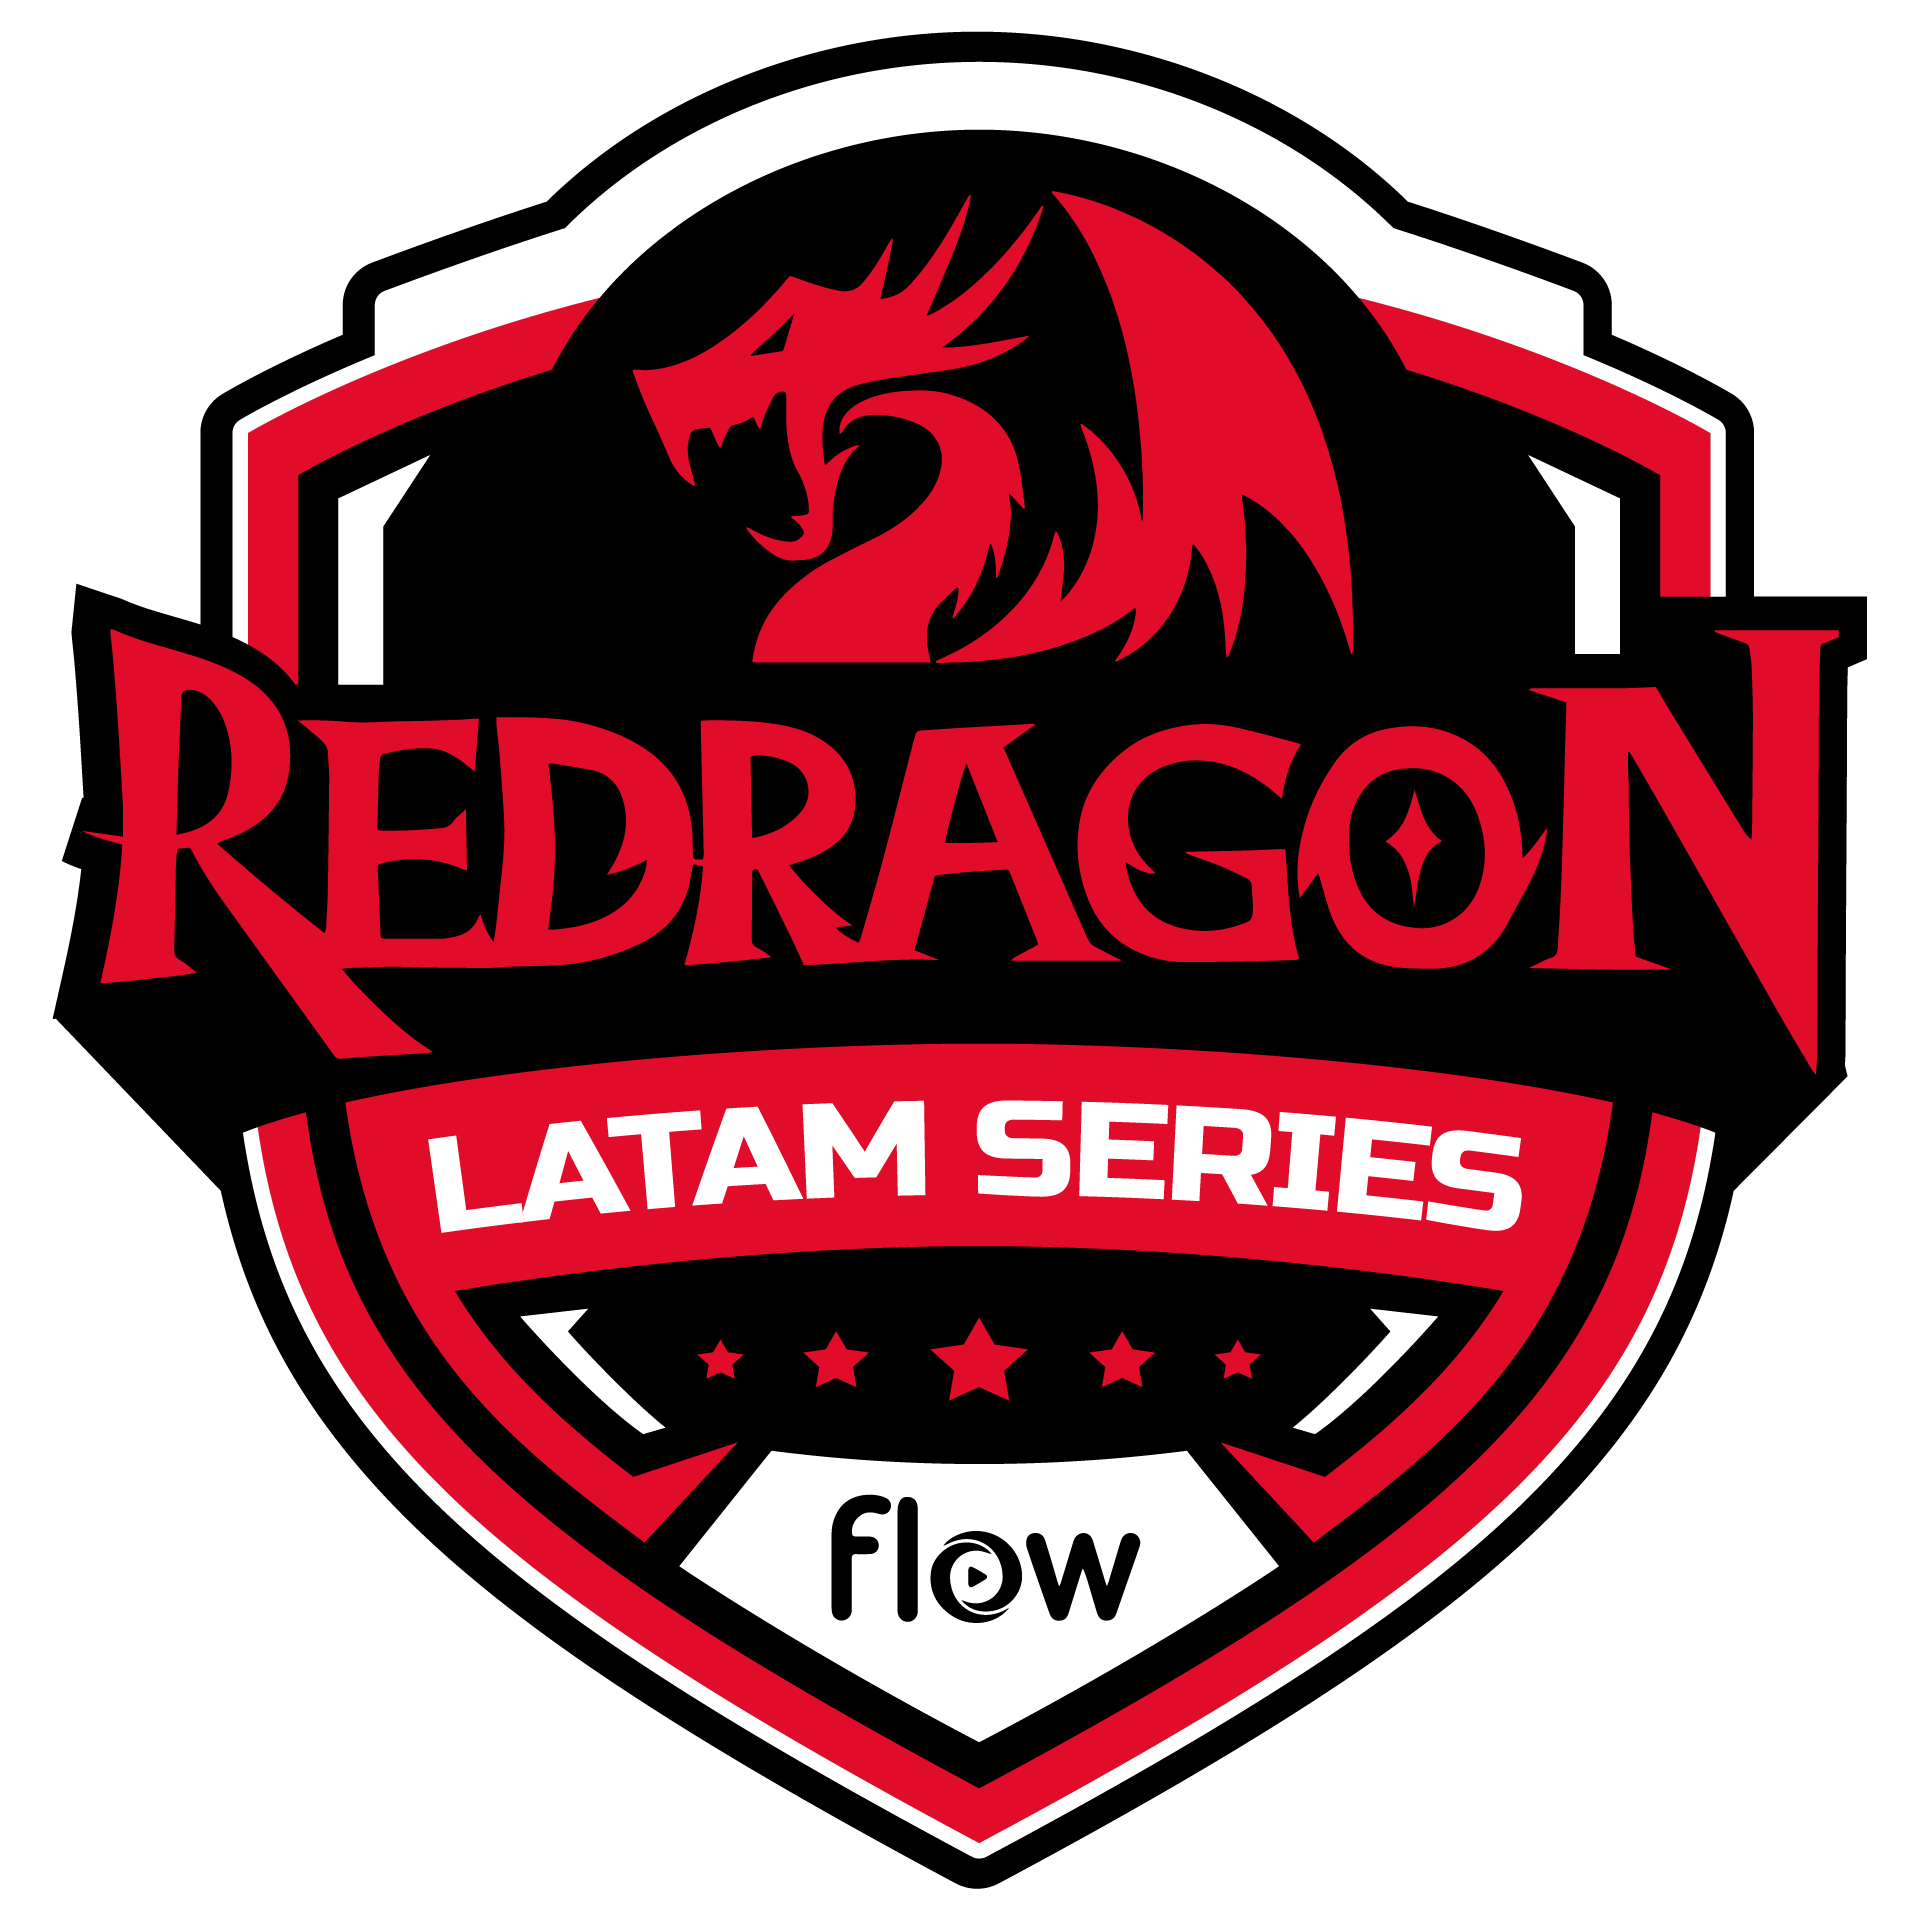 Redragon Latam Series 2021 Cono Sur